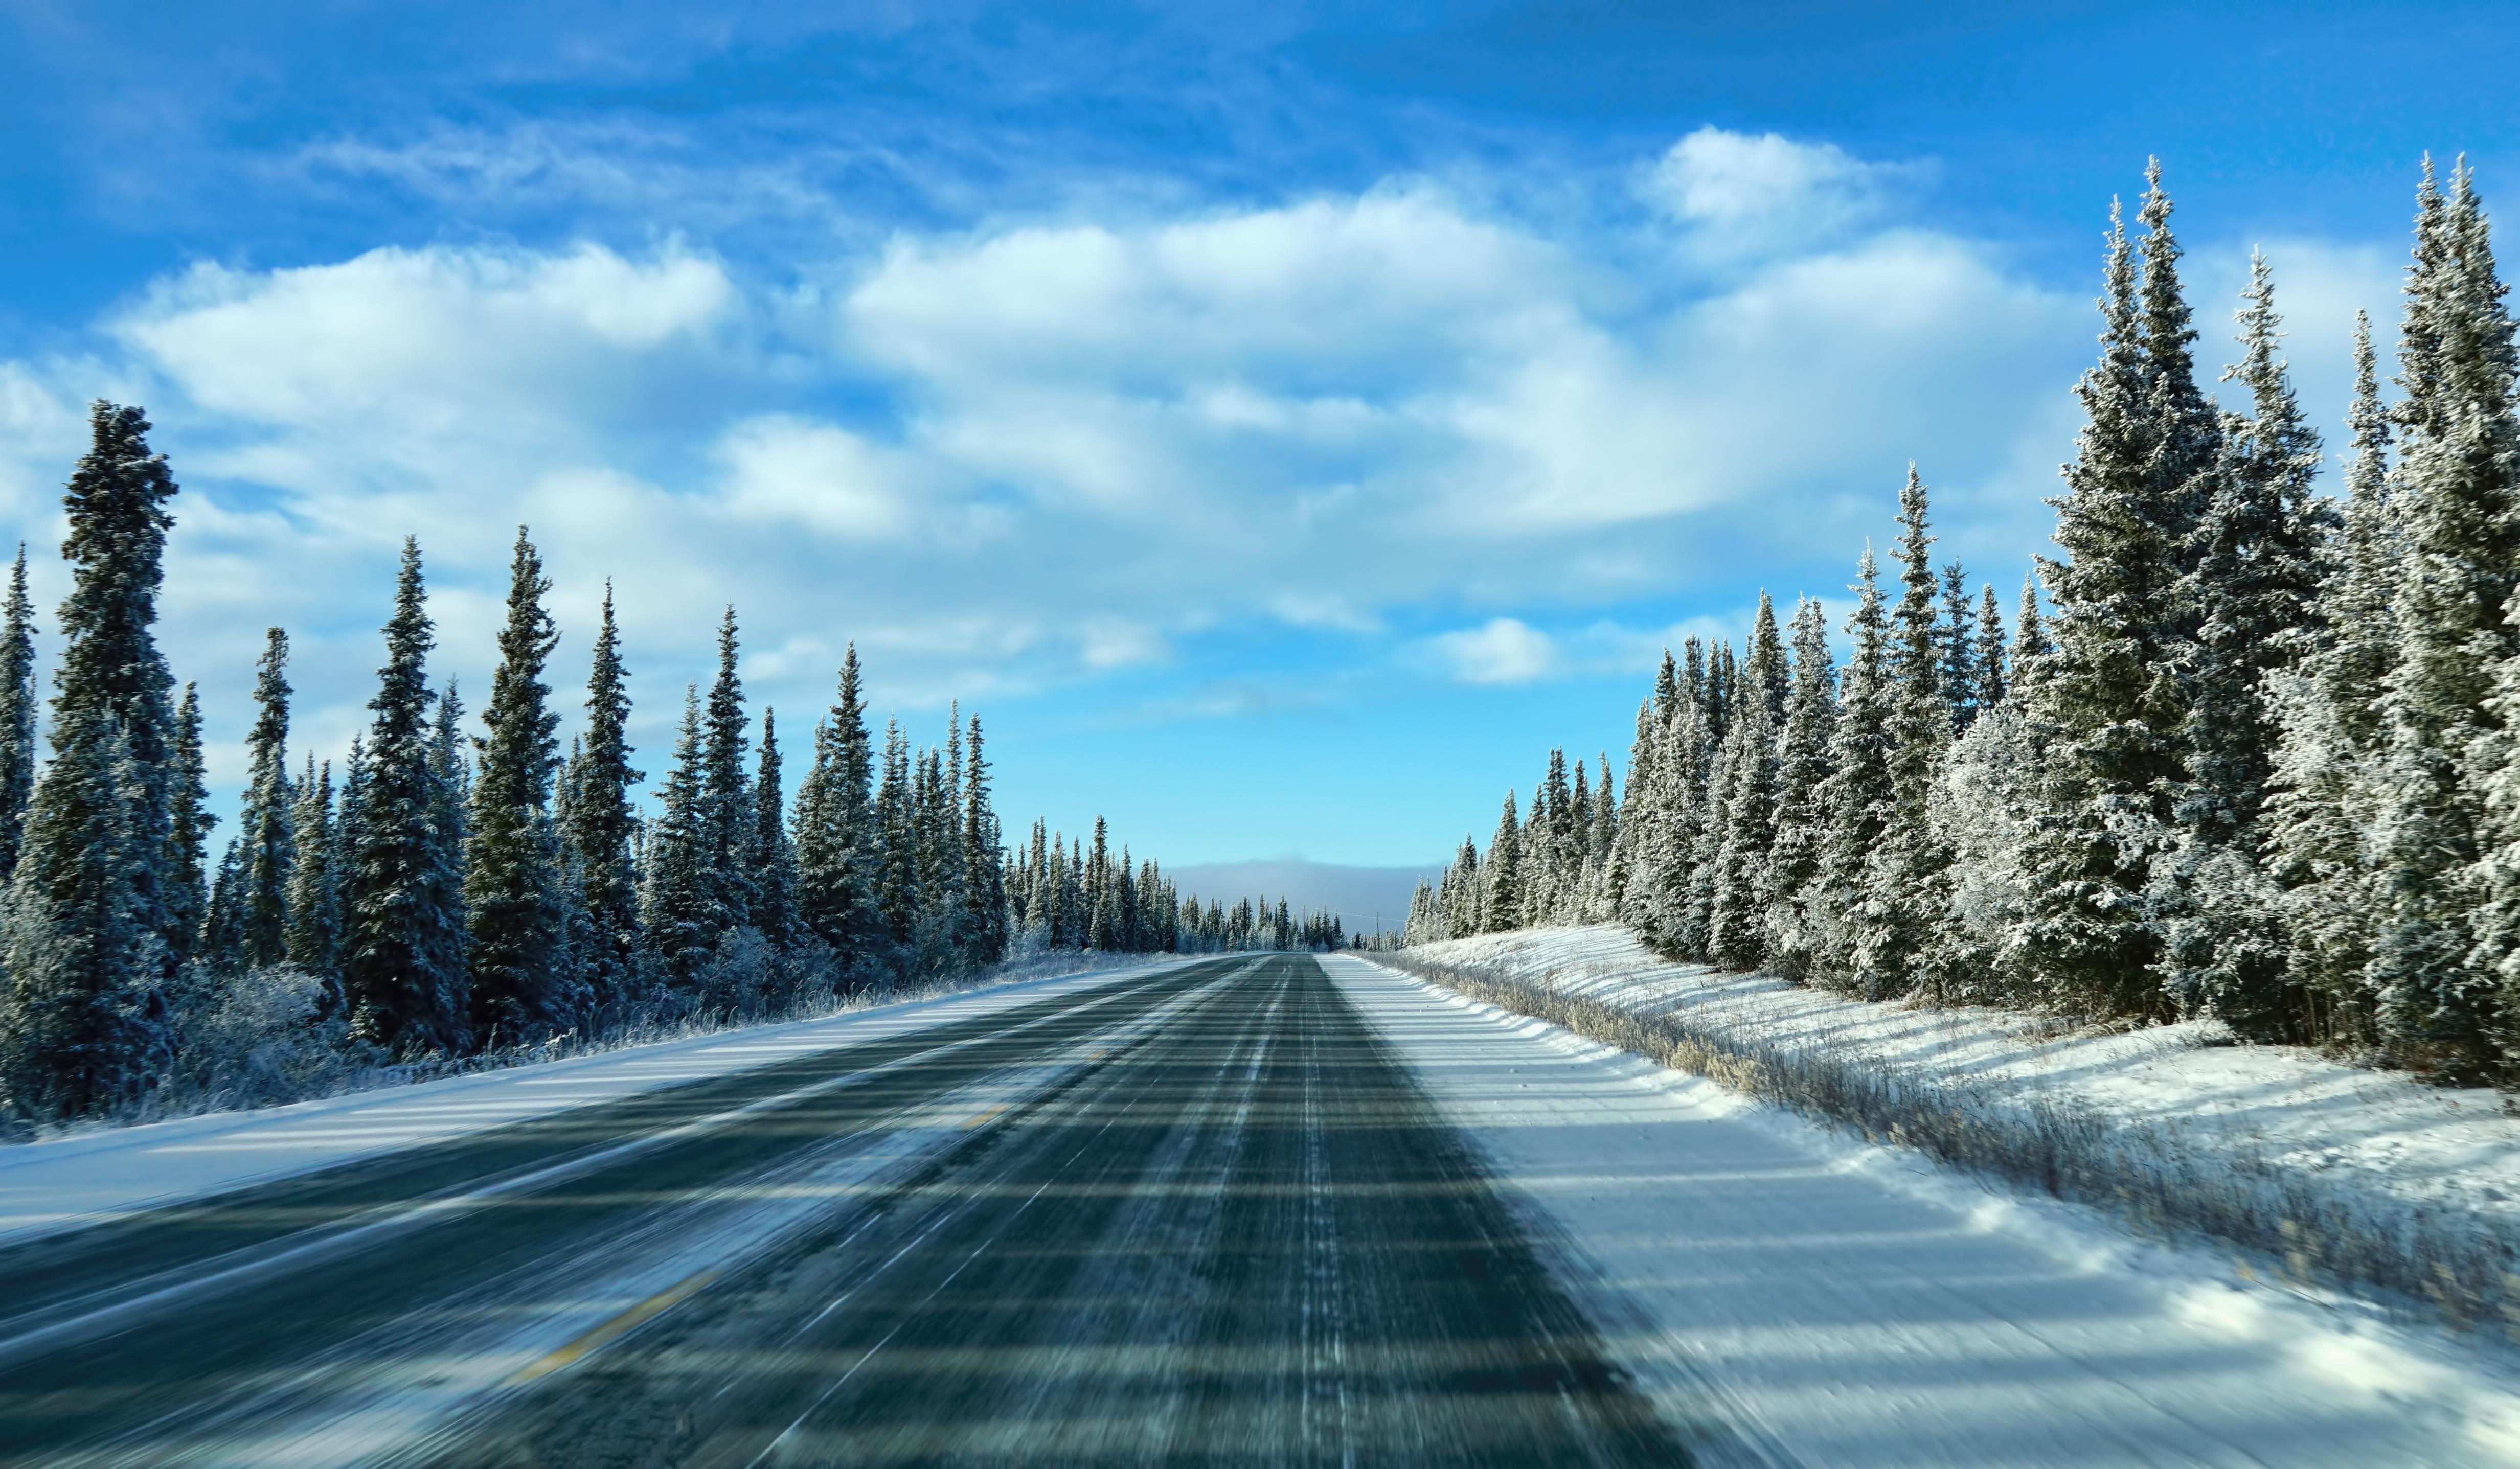 Wallpaper. Winter. photo. picture. Alaska, winter, road, trees, landscape